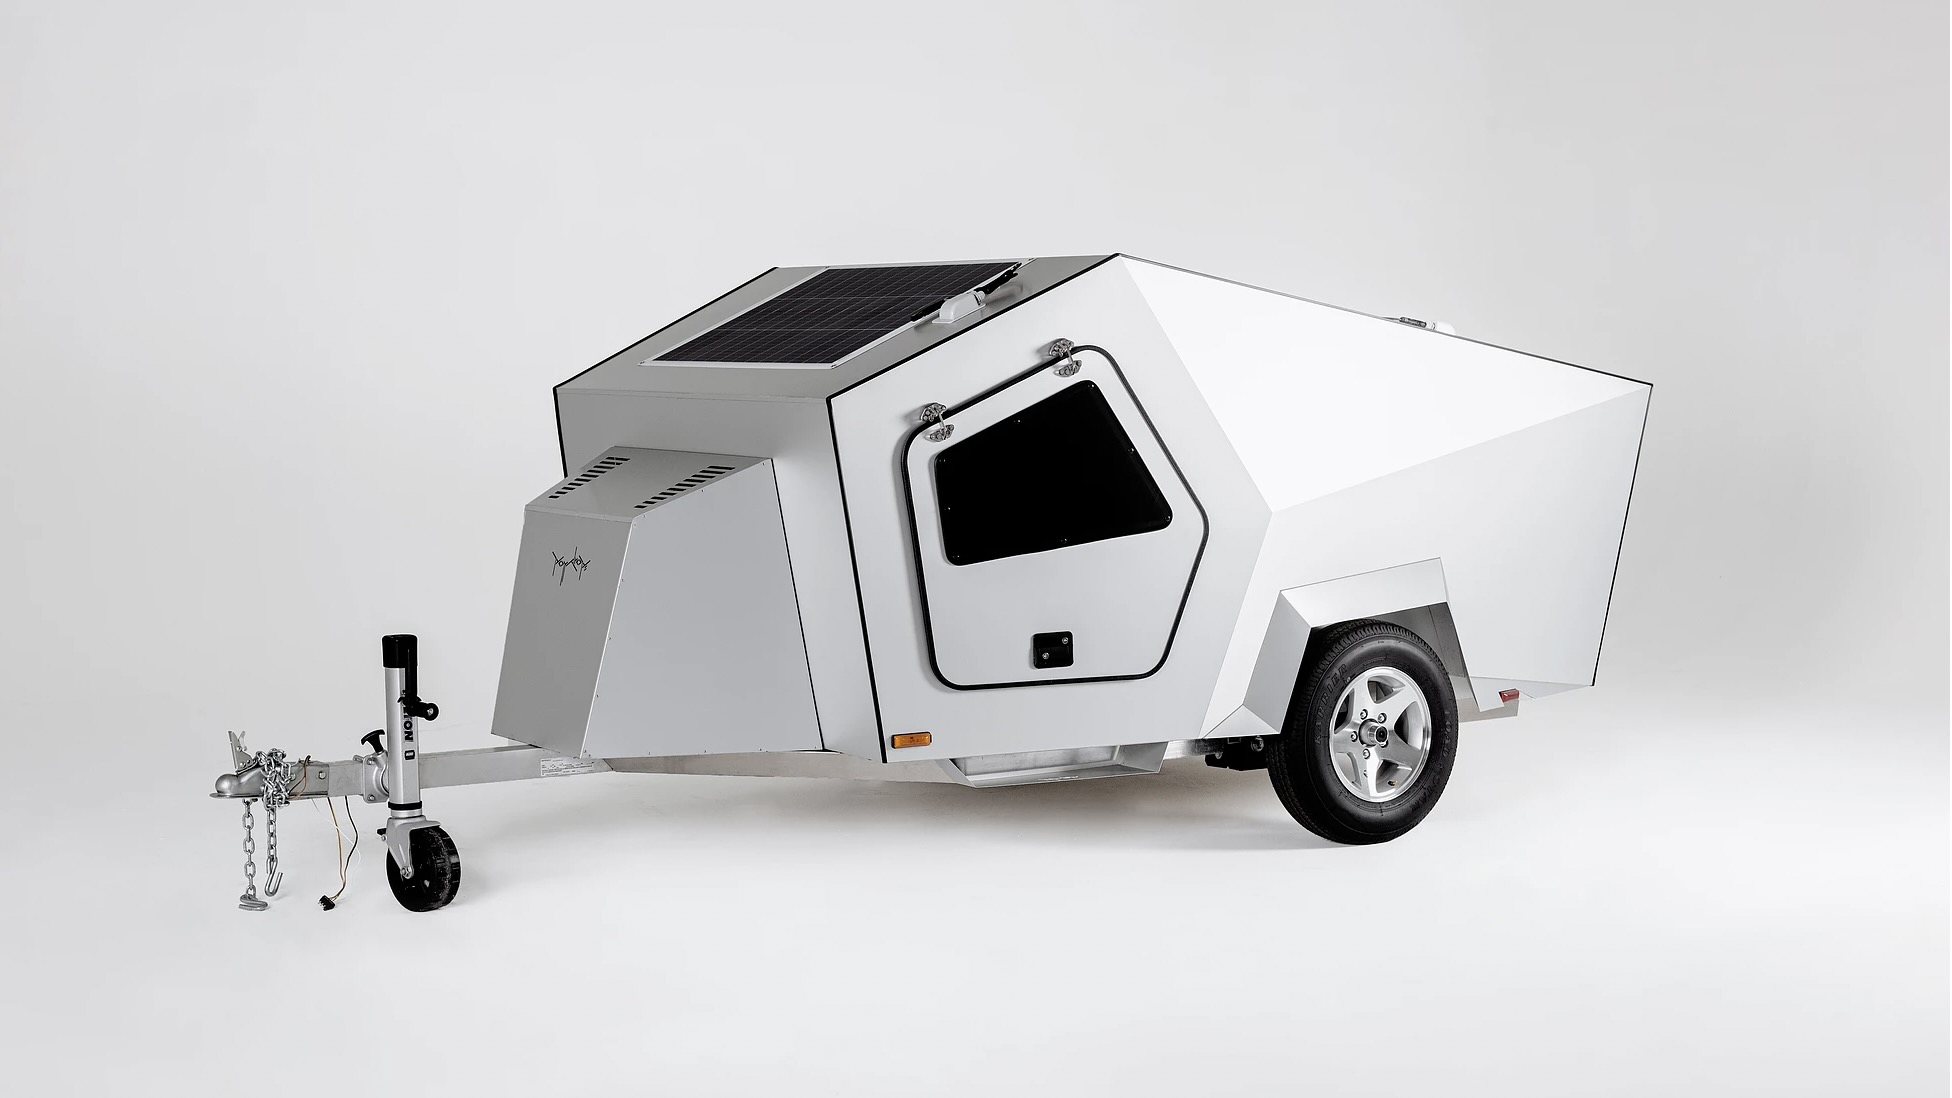 Polydrops' new EV camping trailer boasts a big battery, solar panels